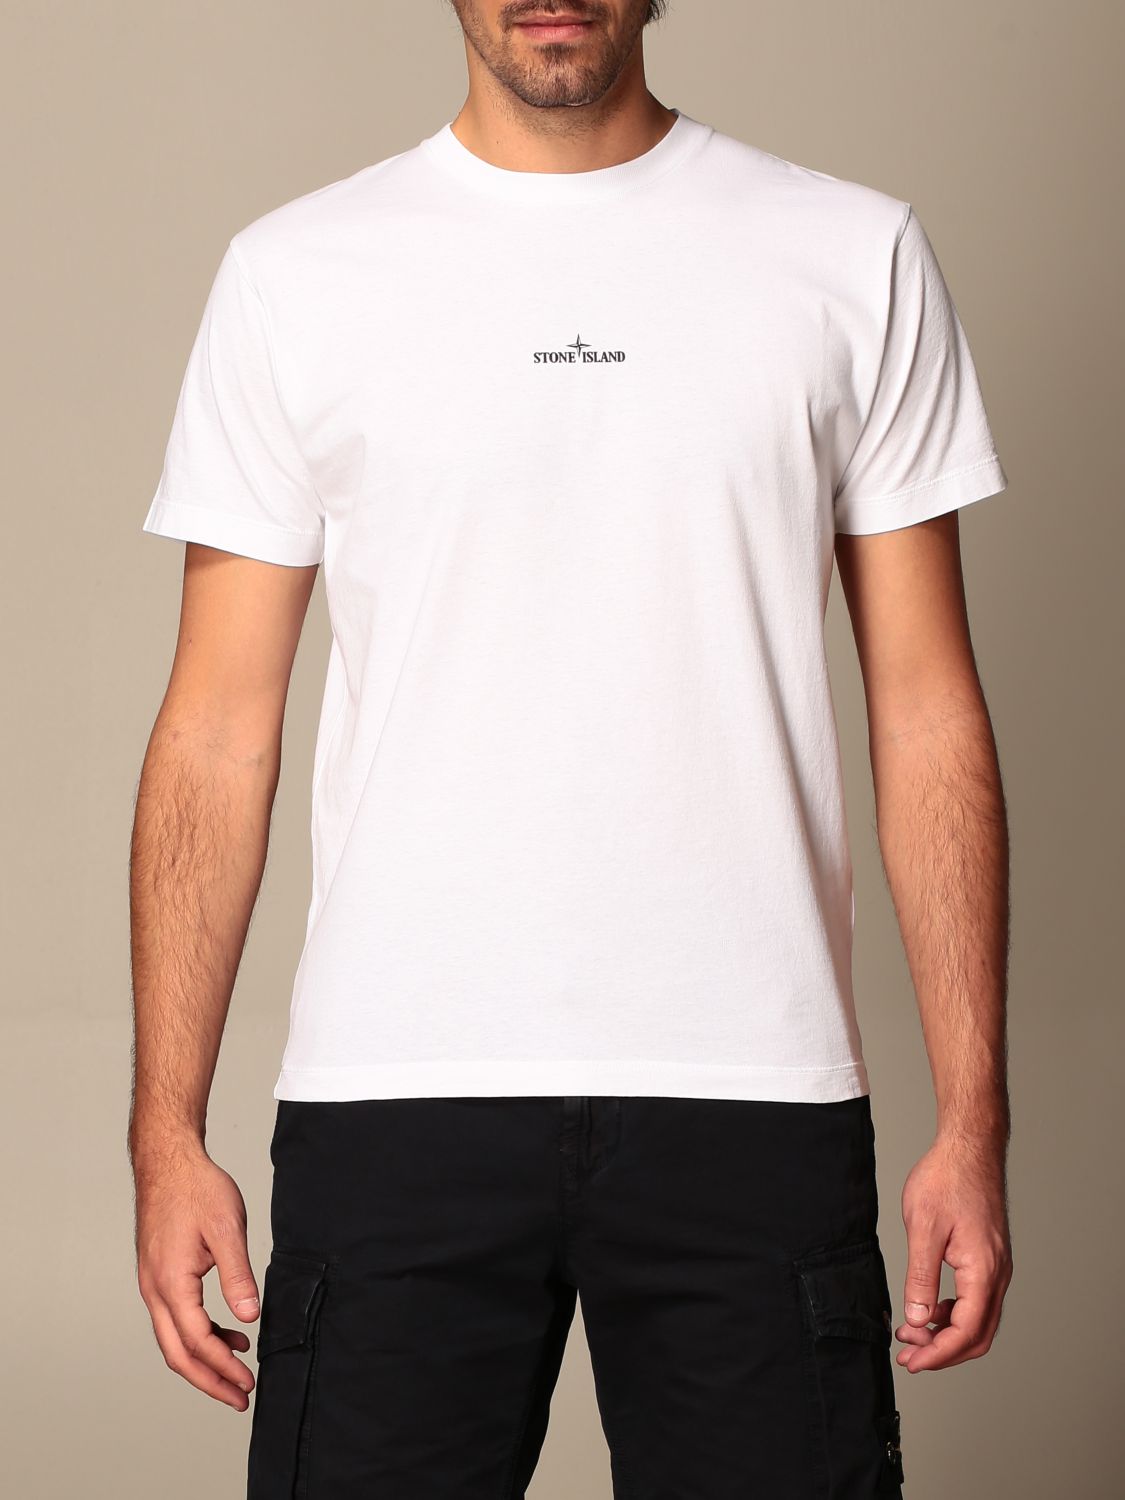 STONE ISLAND: cotton T-shirt with back print - White | Stone Island t ...